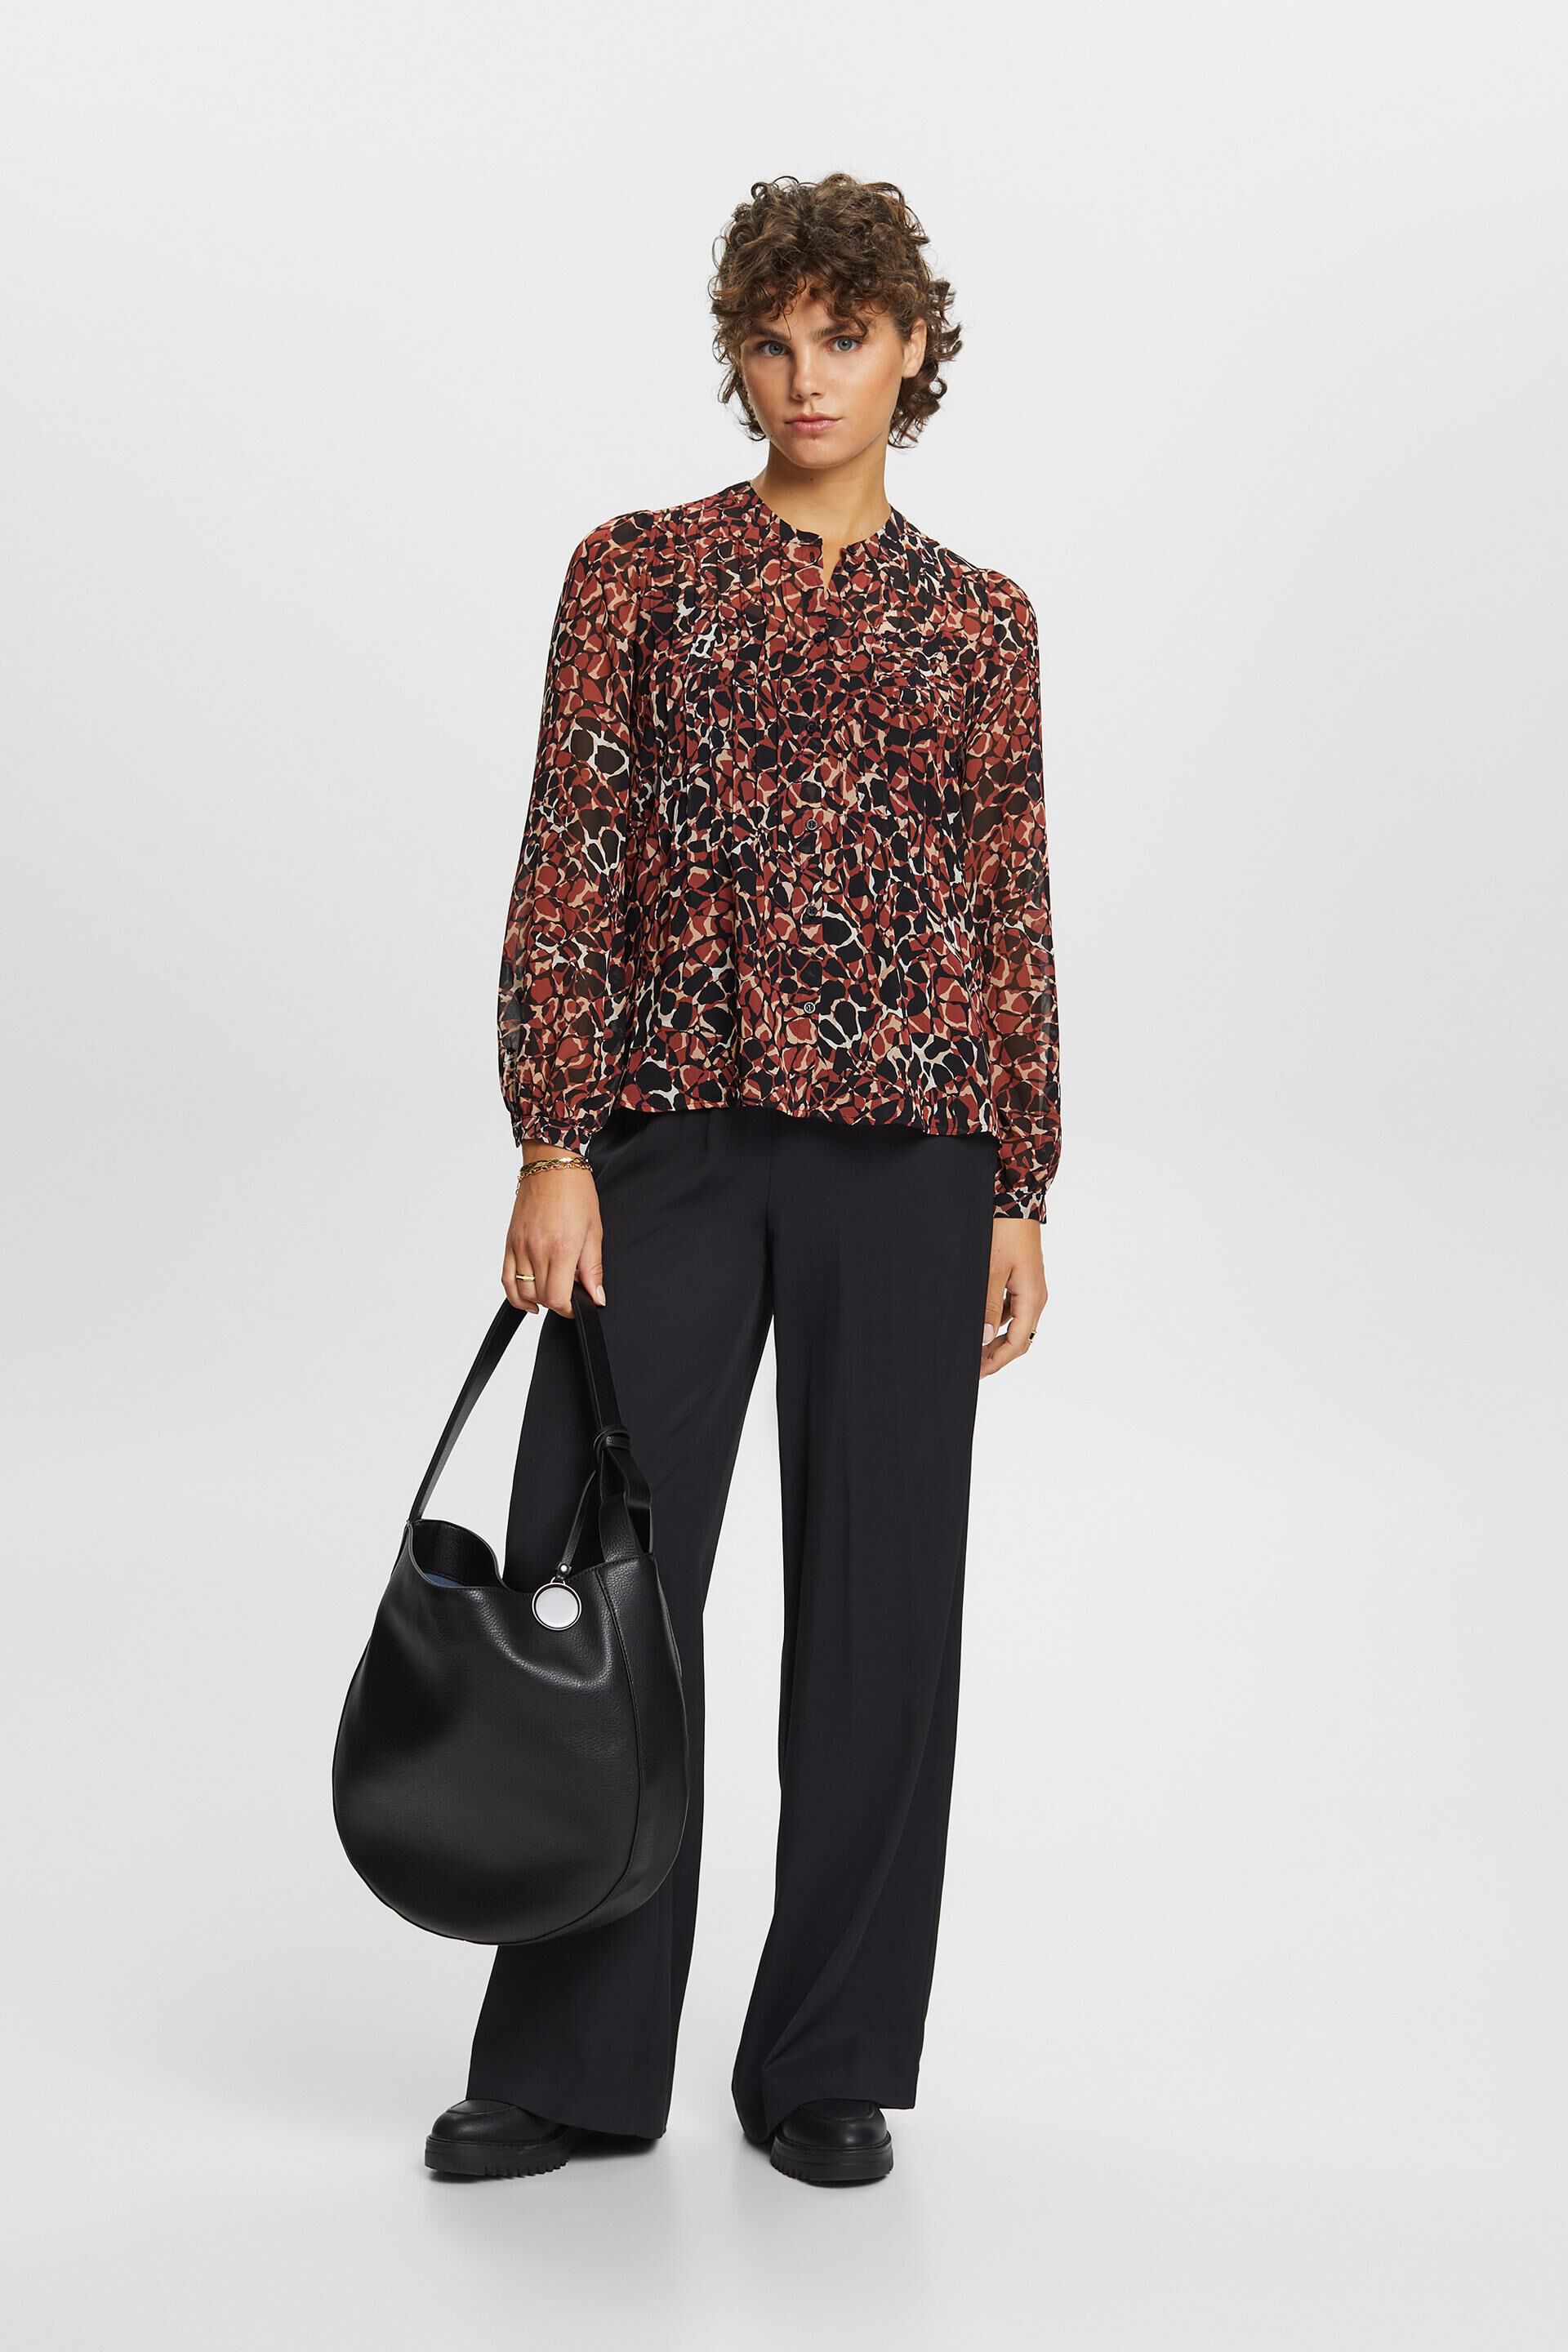 Esprit Damen Recycled: patterned chiffon blouse